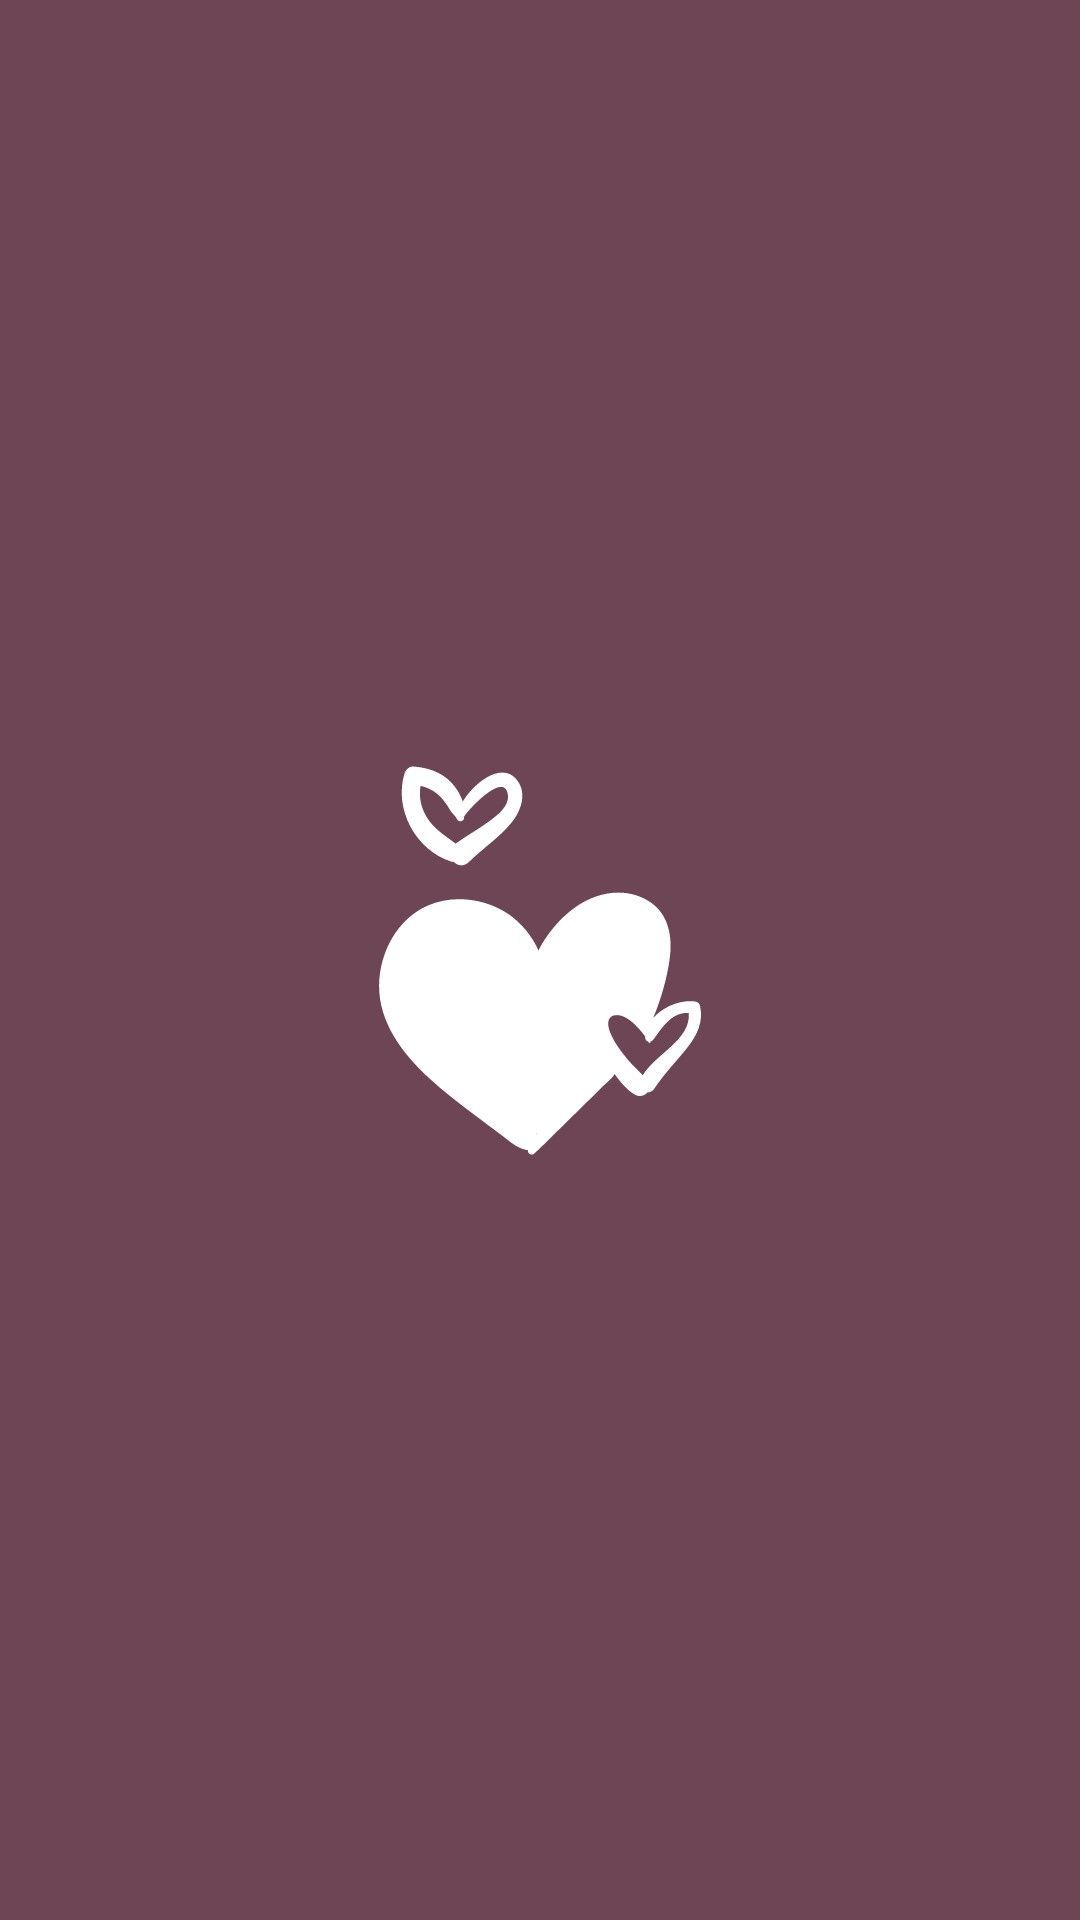 Hearts. Papel de parede Corações #papeldeparede #fundos #background # wallpaper #iphonewallpaper. Instagram wallpaper, Instagram logo, Instagram highlight icons